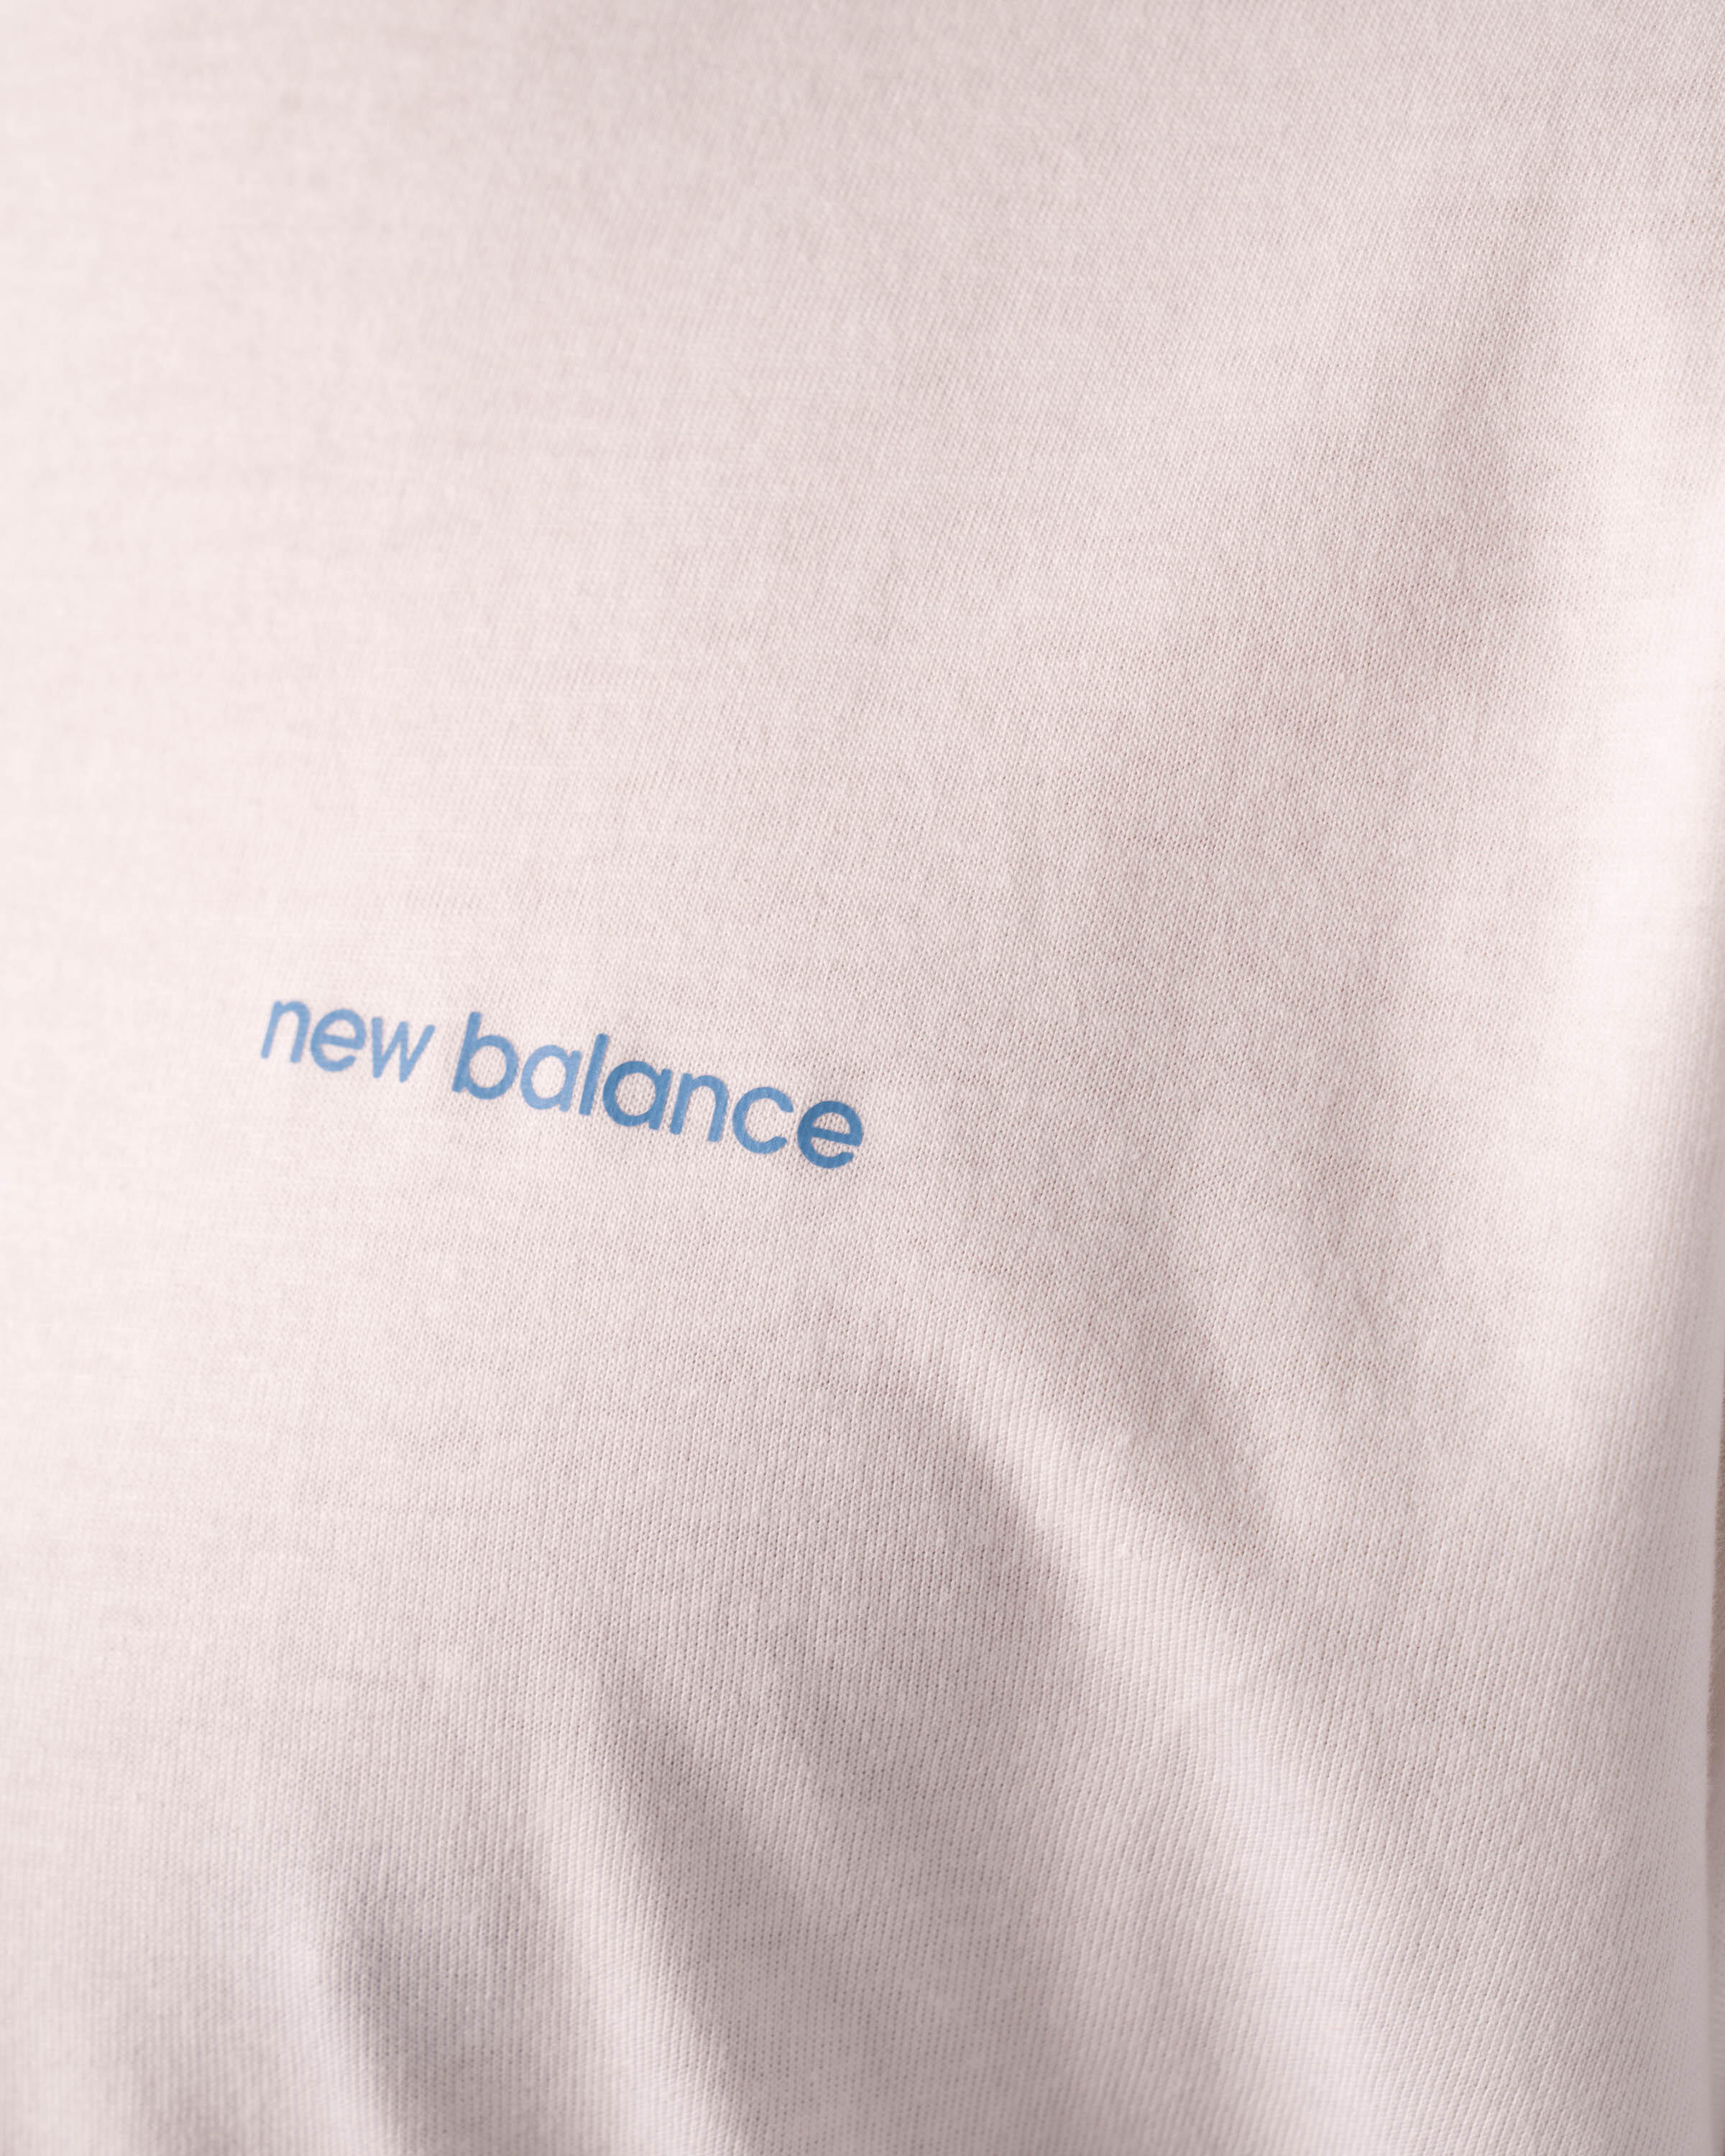 New Balance Essentials Cafe Shop Front T-Shirt